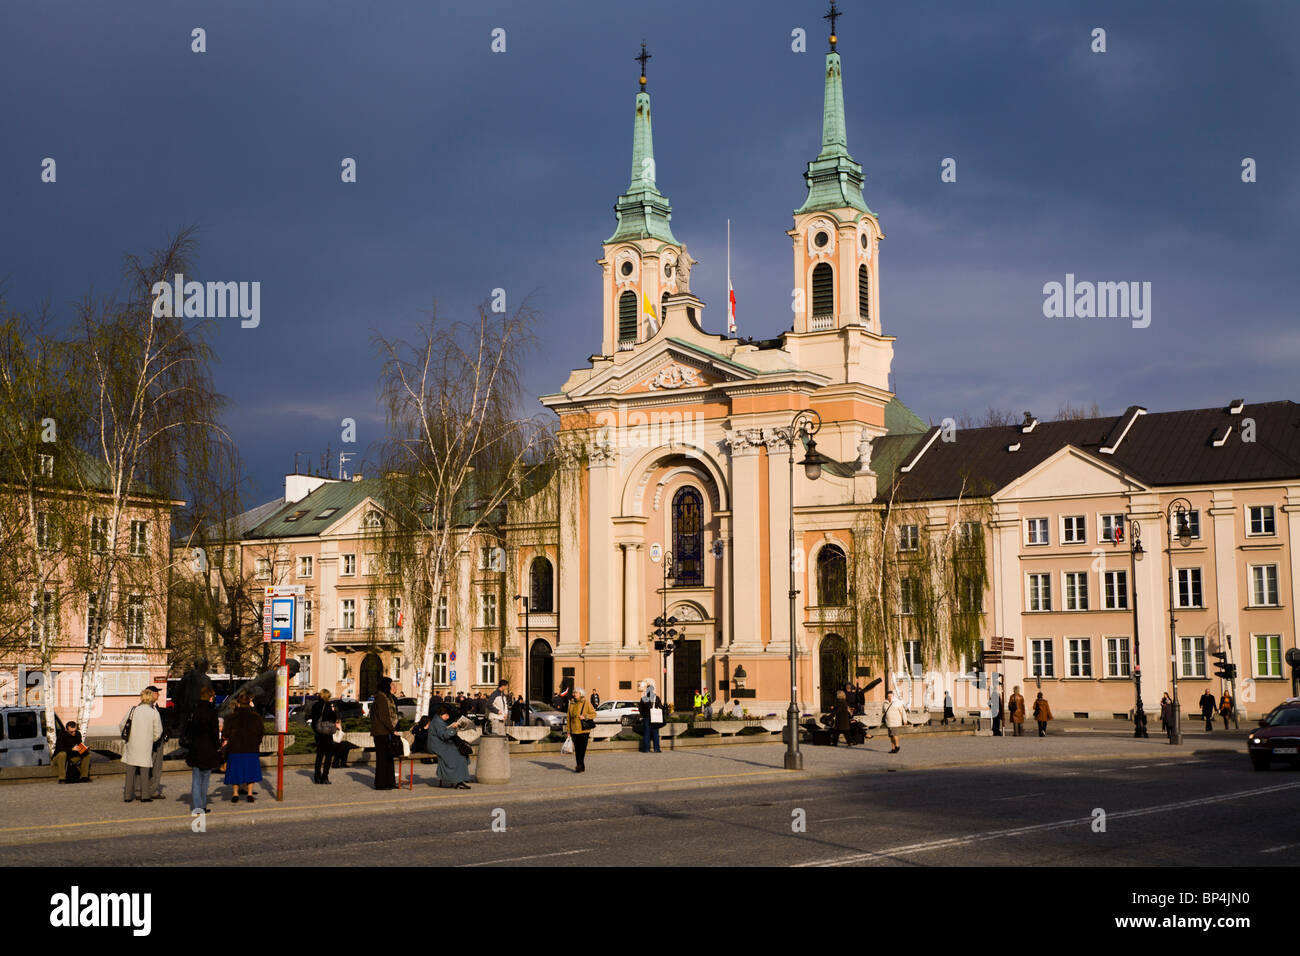 The Field Cathedral of the Polish Army. Krasinski Square, Warsaw Poland. Stock Photo